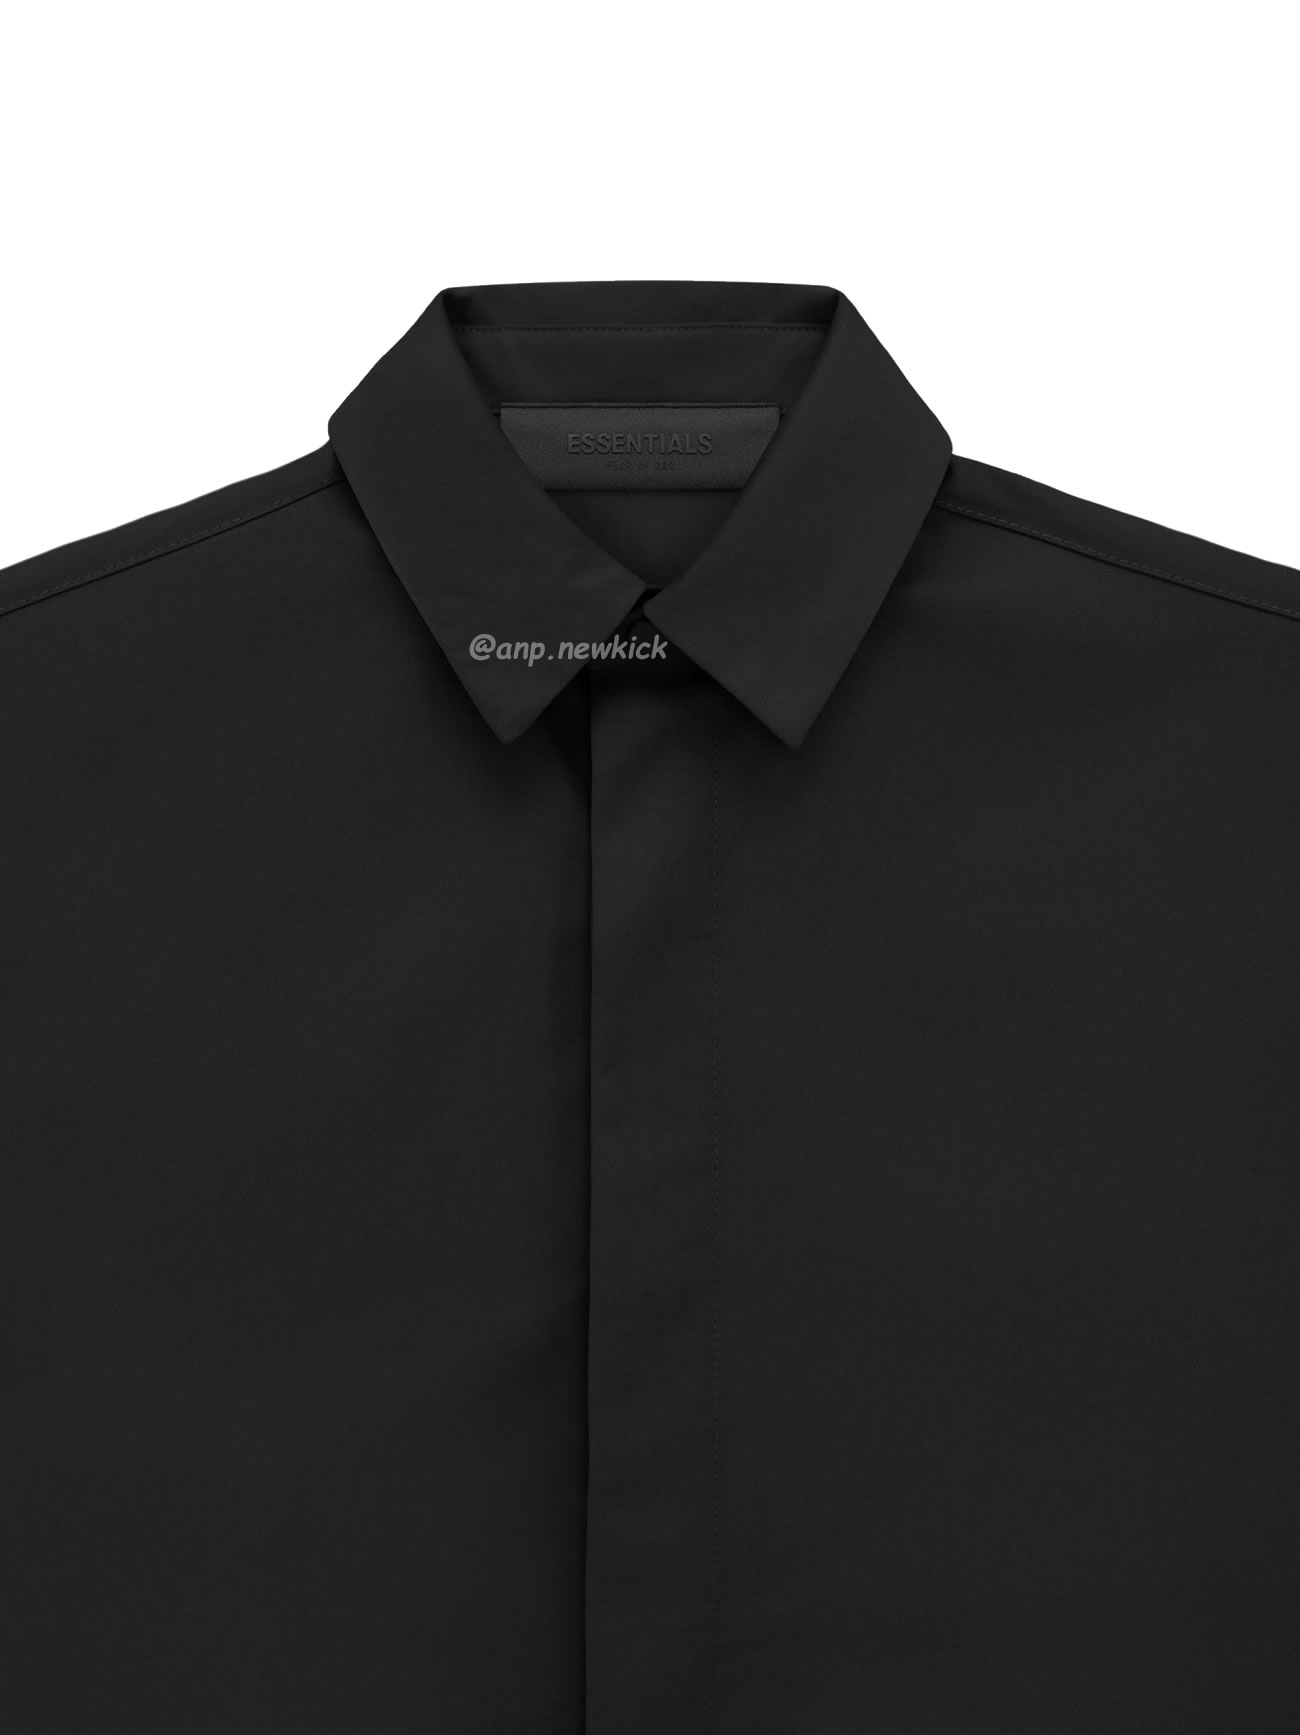 Fear Of God Essentials Fog 23fw Tie Cuffed Shirt Black Apricot Gray S Xl (3) - newkick.org